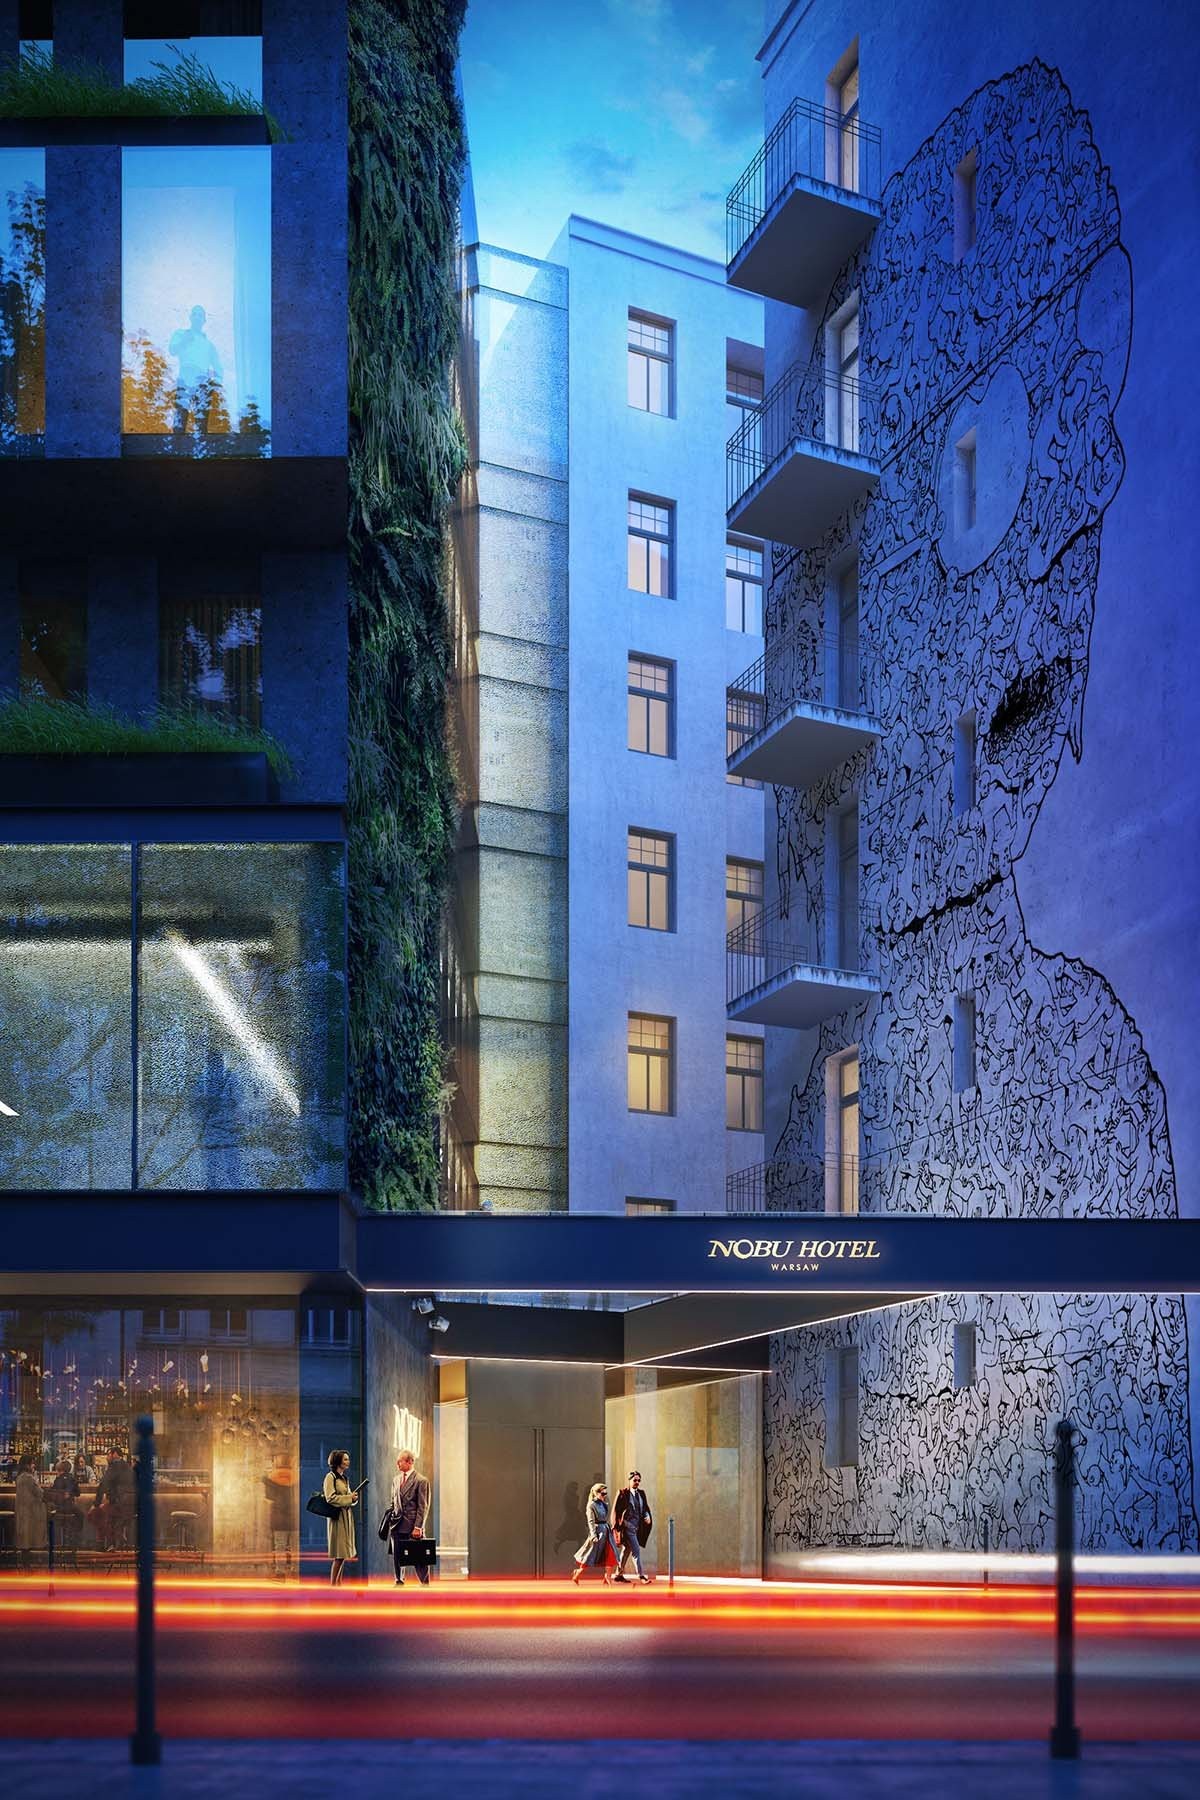 Nobu luxury ξενοδοχείο στη Βαρσοβία του De Niro πρόσοψη με street art